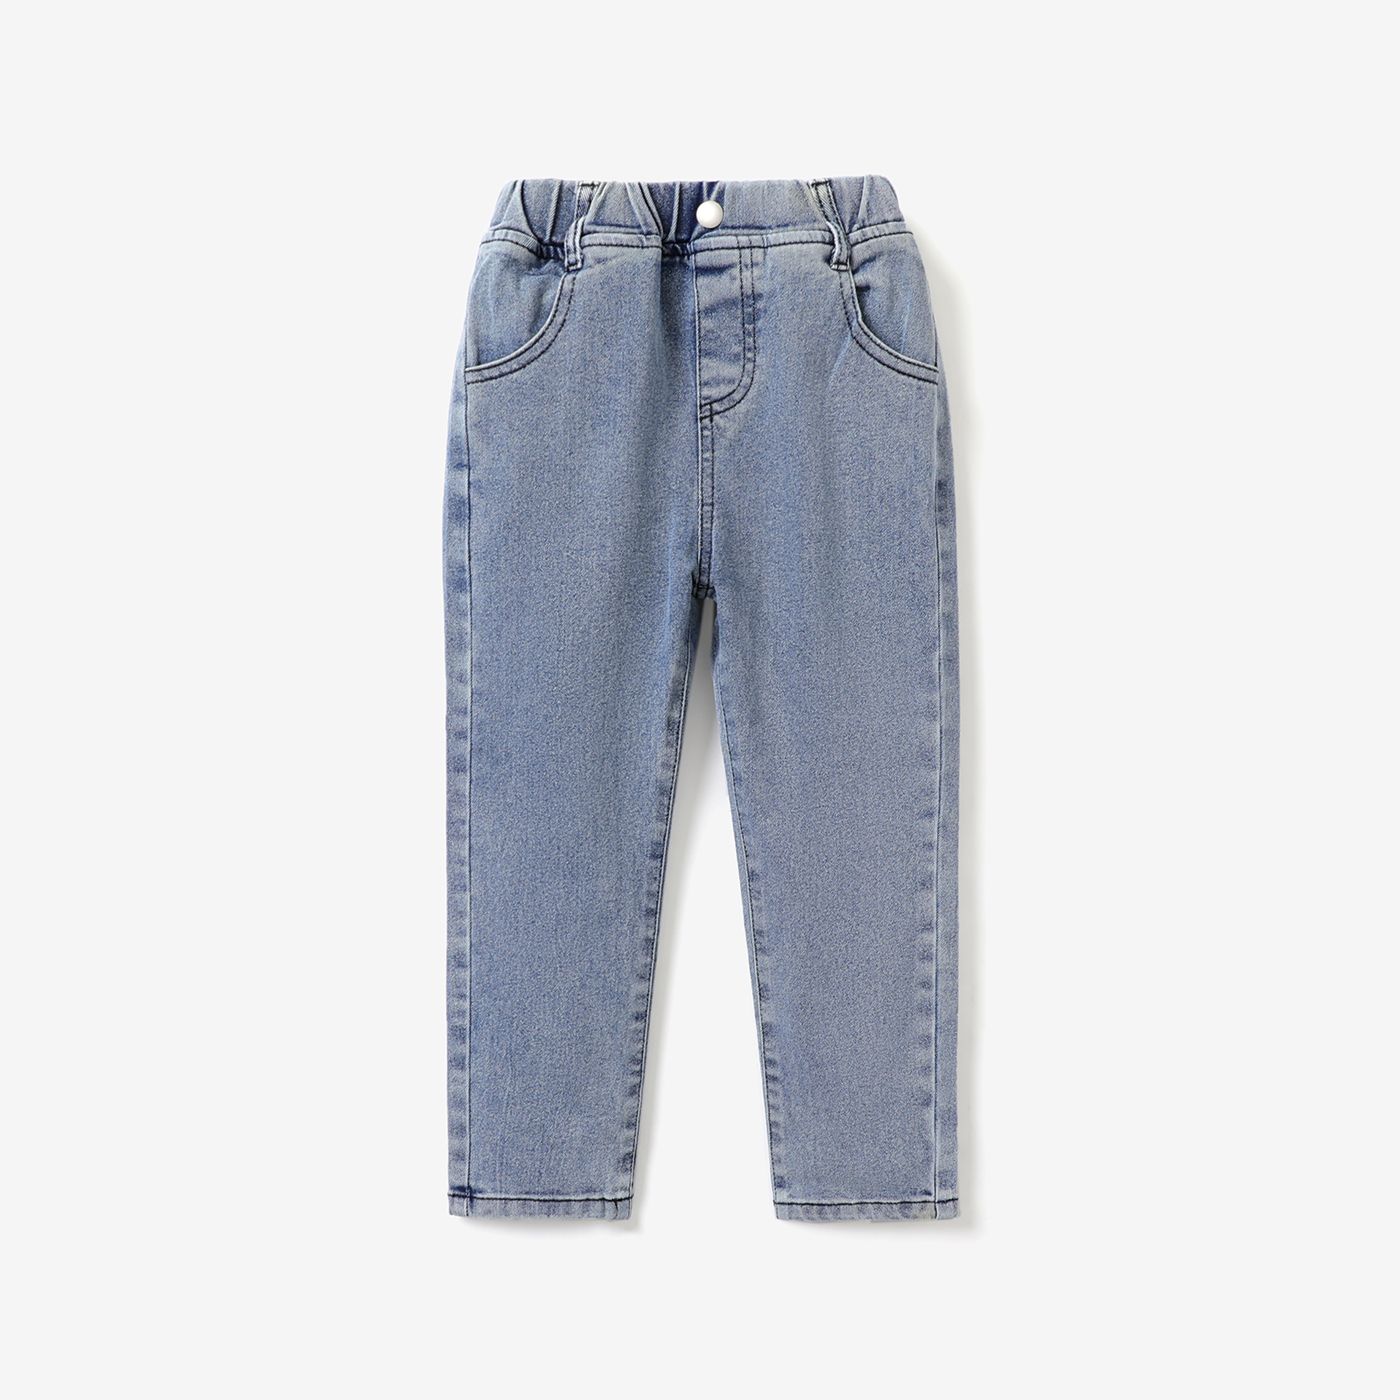 Toddler Boy Casual Elasticized Denim Jeans